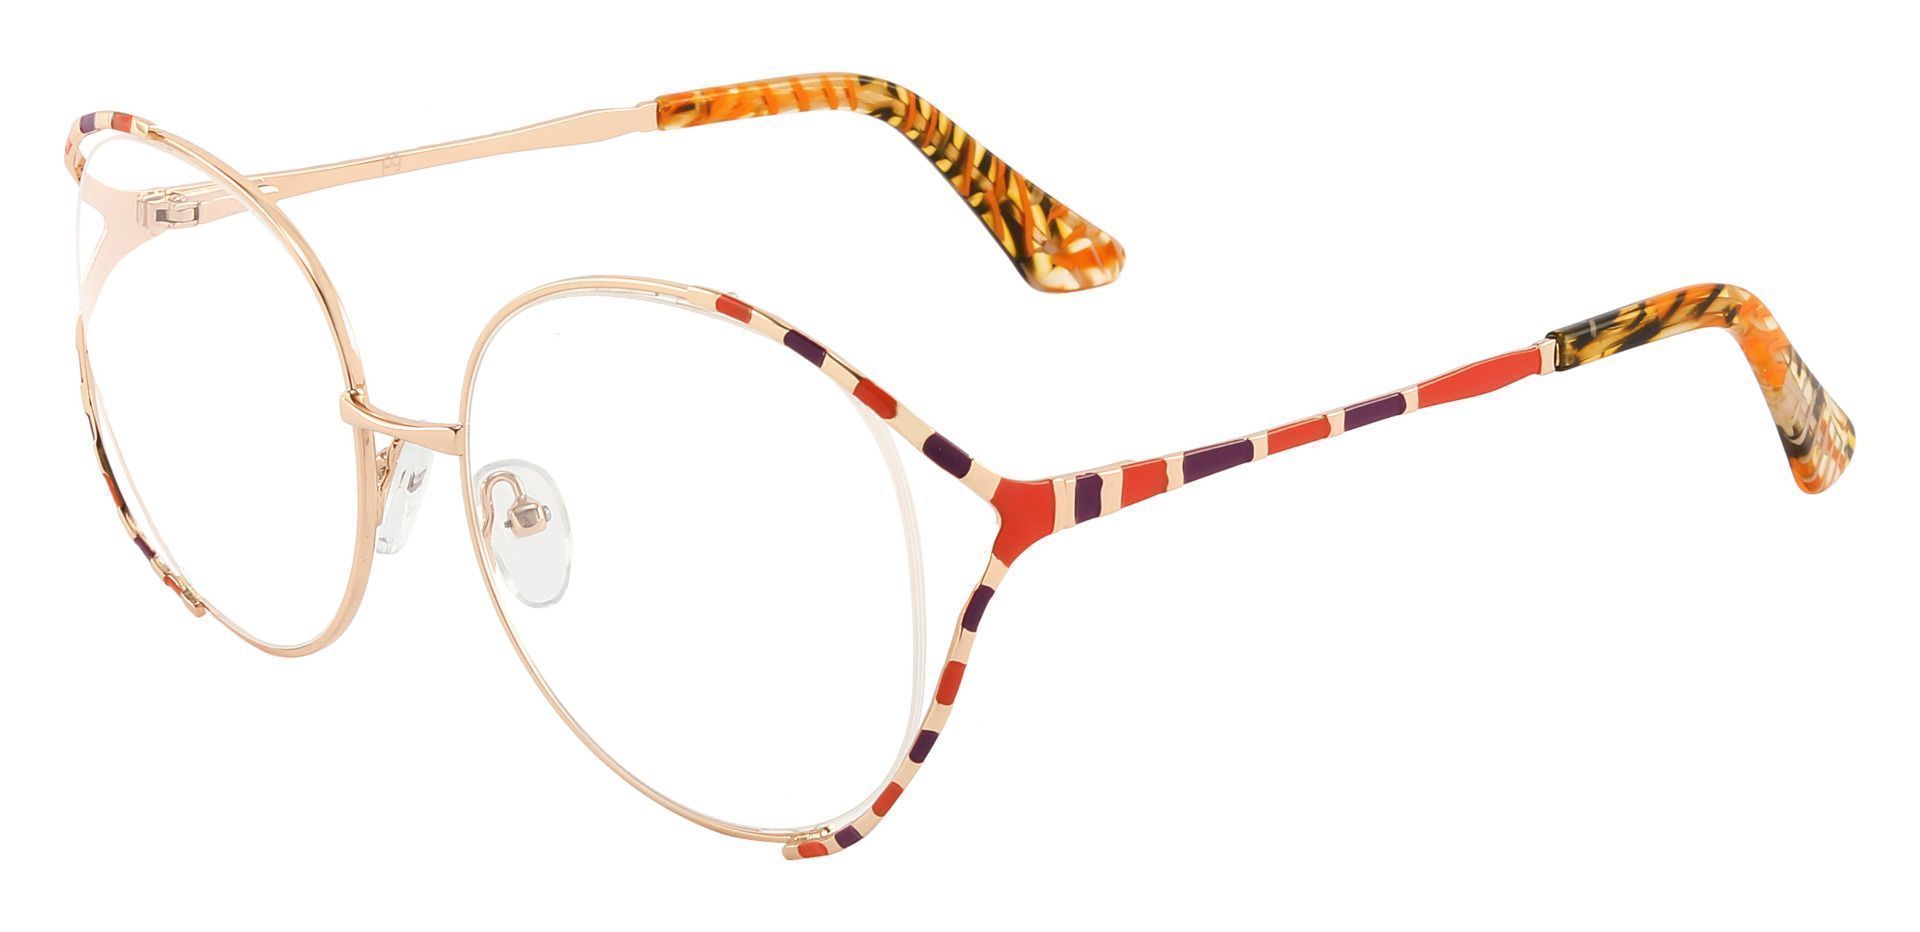 Dorothy Oval Prescription Glasses - Brown